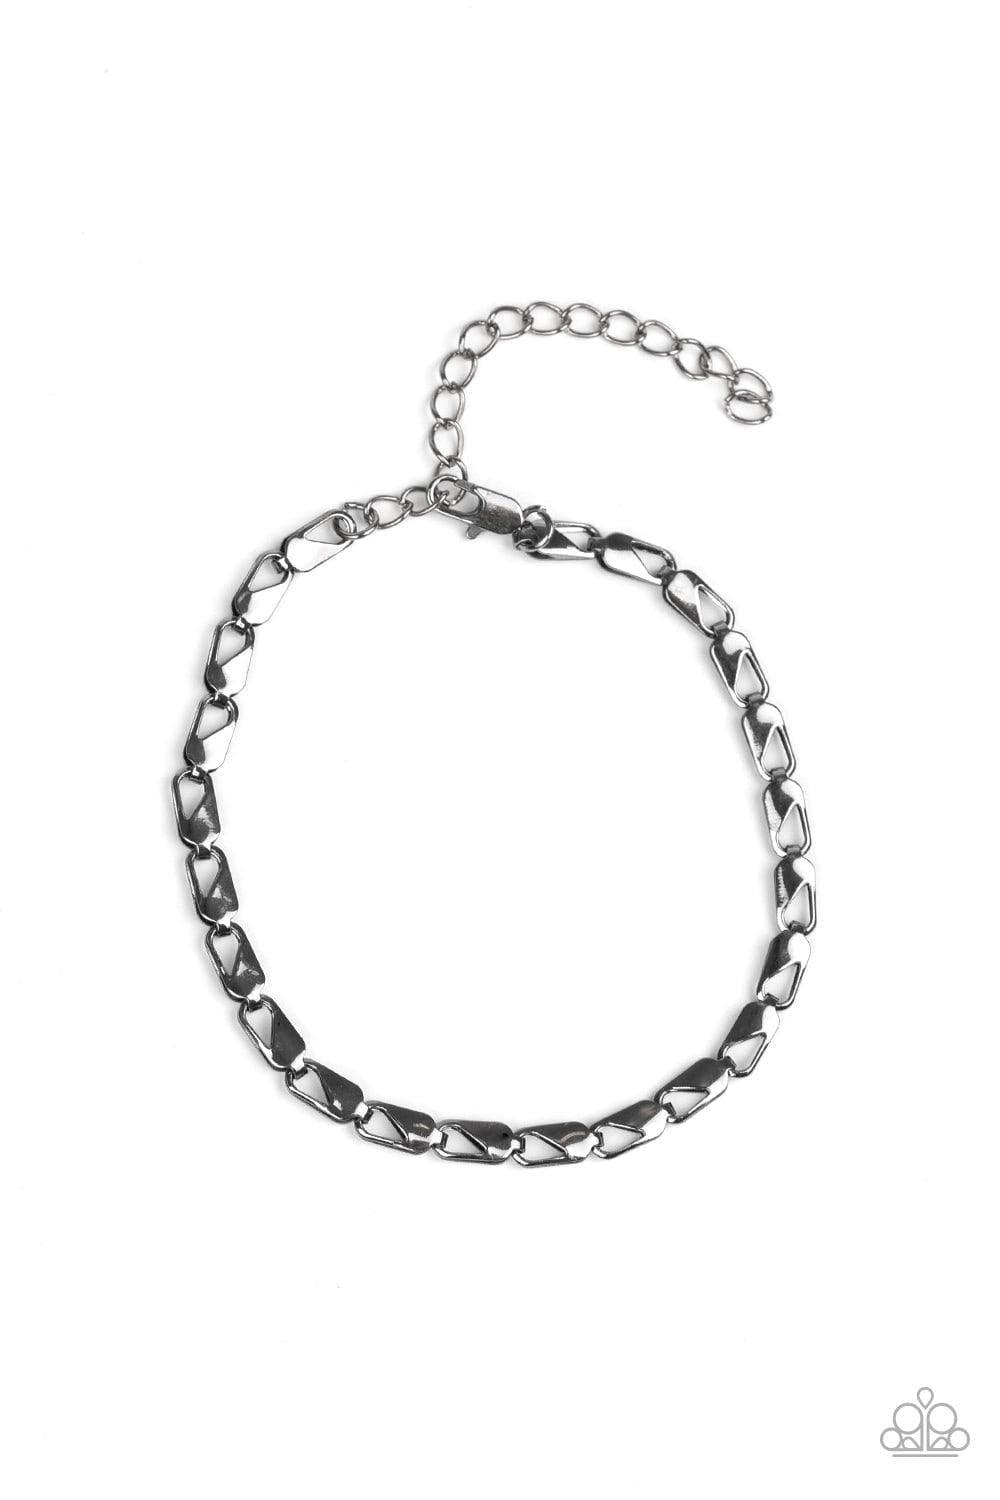 Paparazzi Accessories - K.o. - Black Men's Chain Bracelet - Bling by JessieK